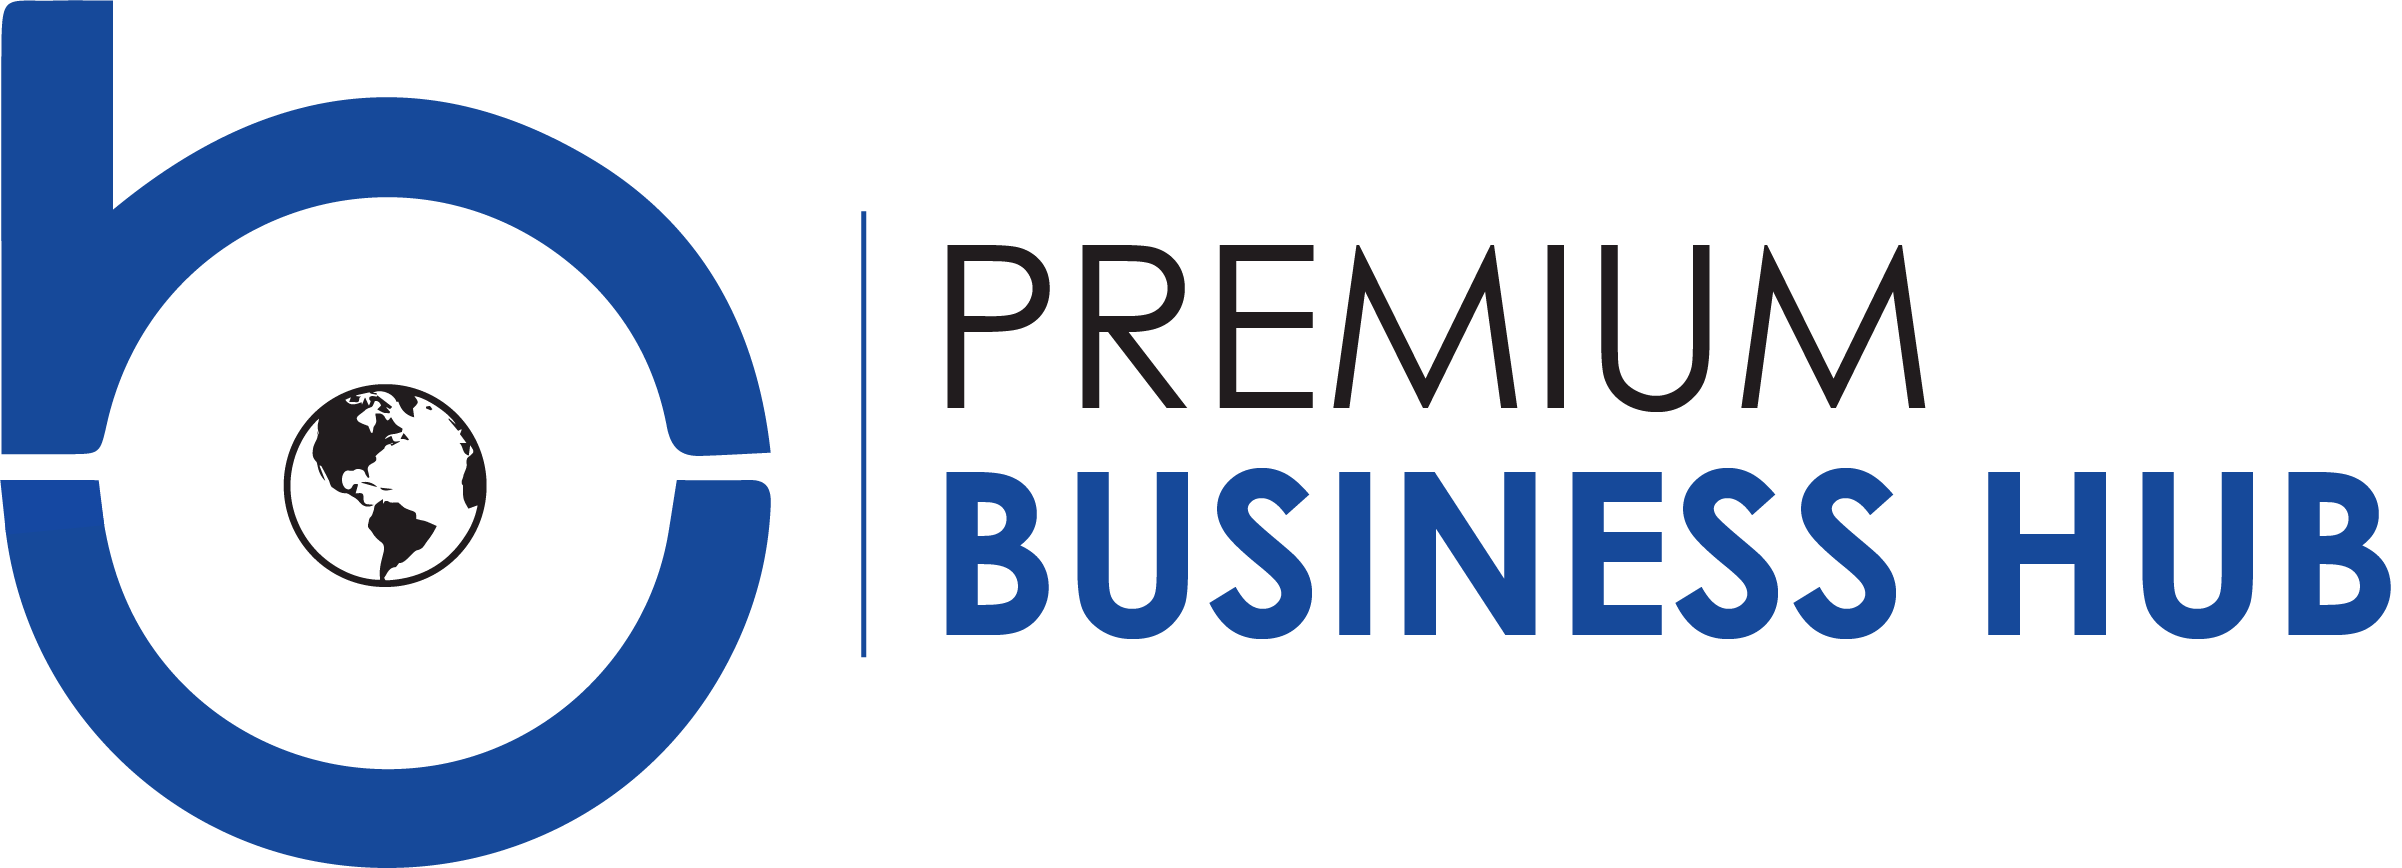 Premium Business Hub